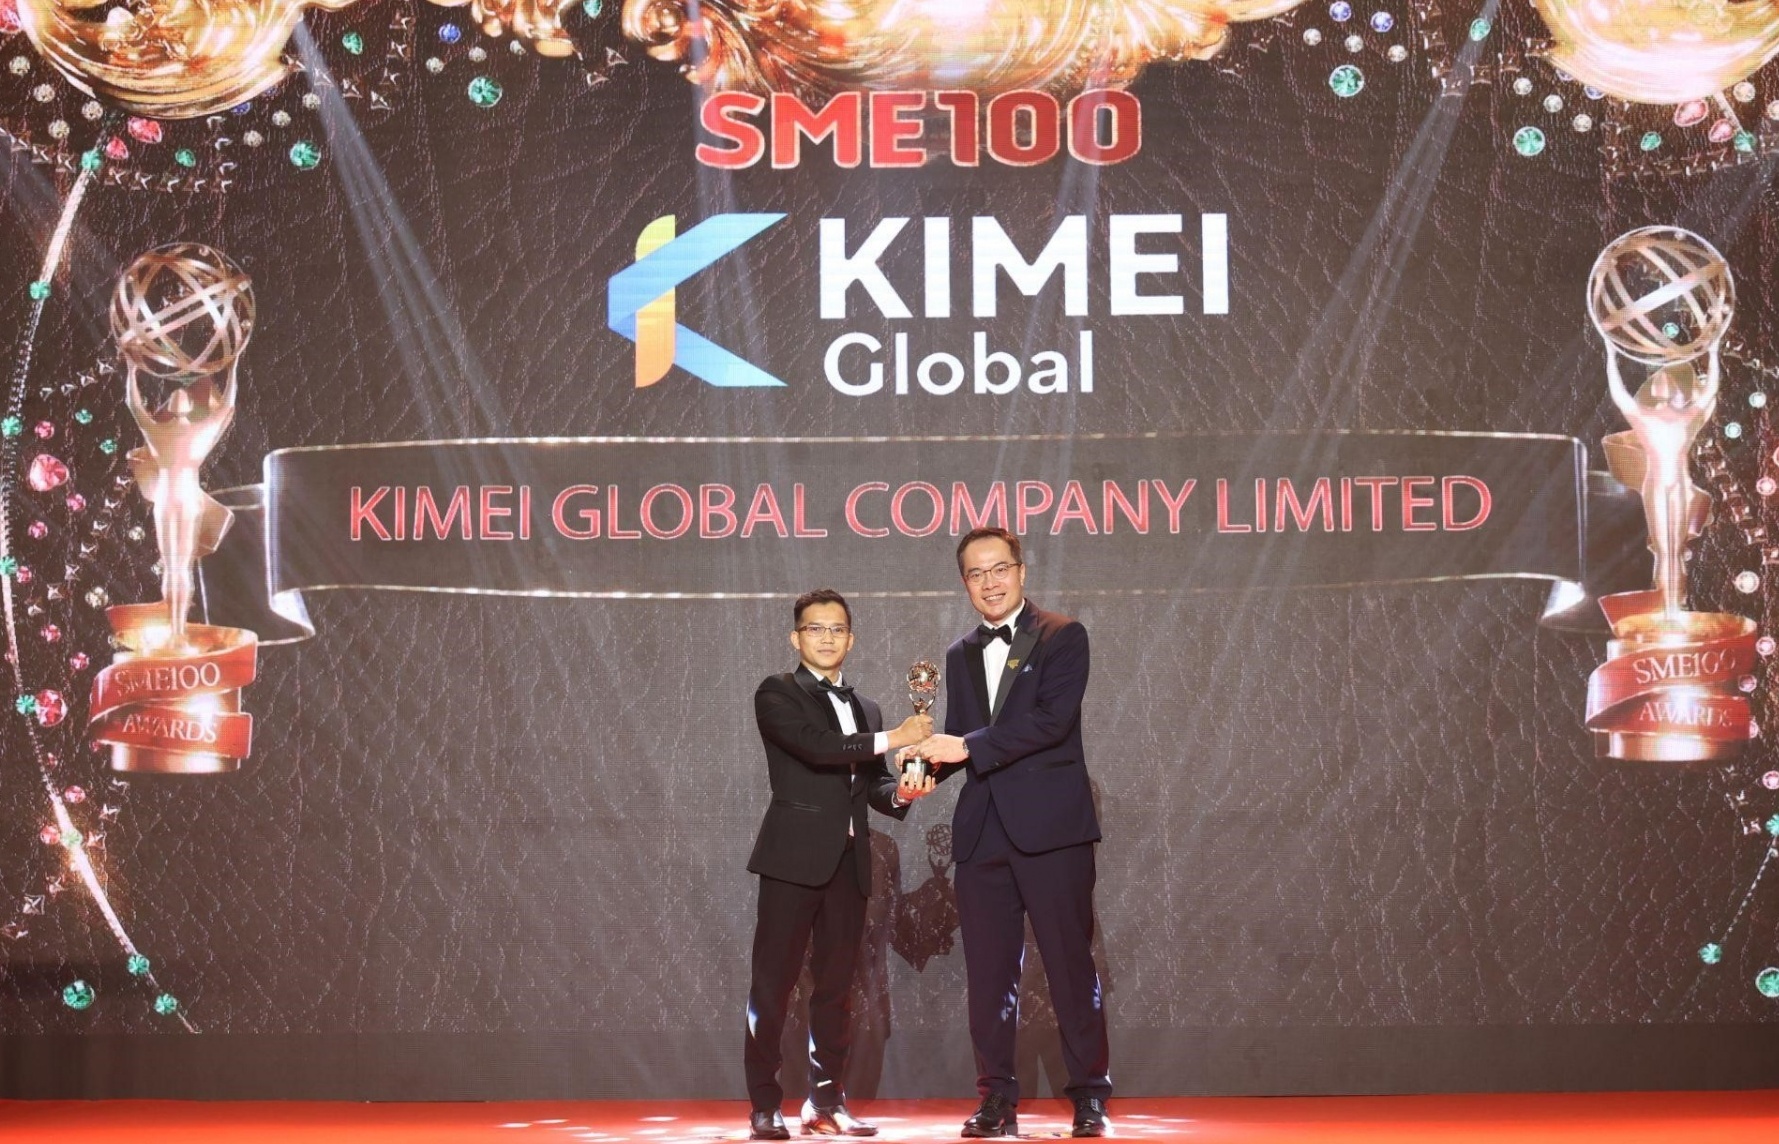 Kimei Global seeks to become best customer choice based on core values